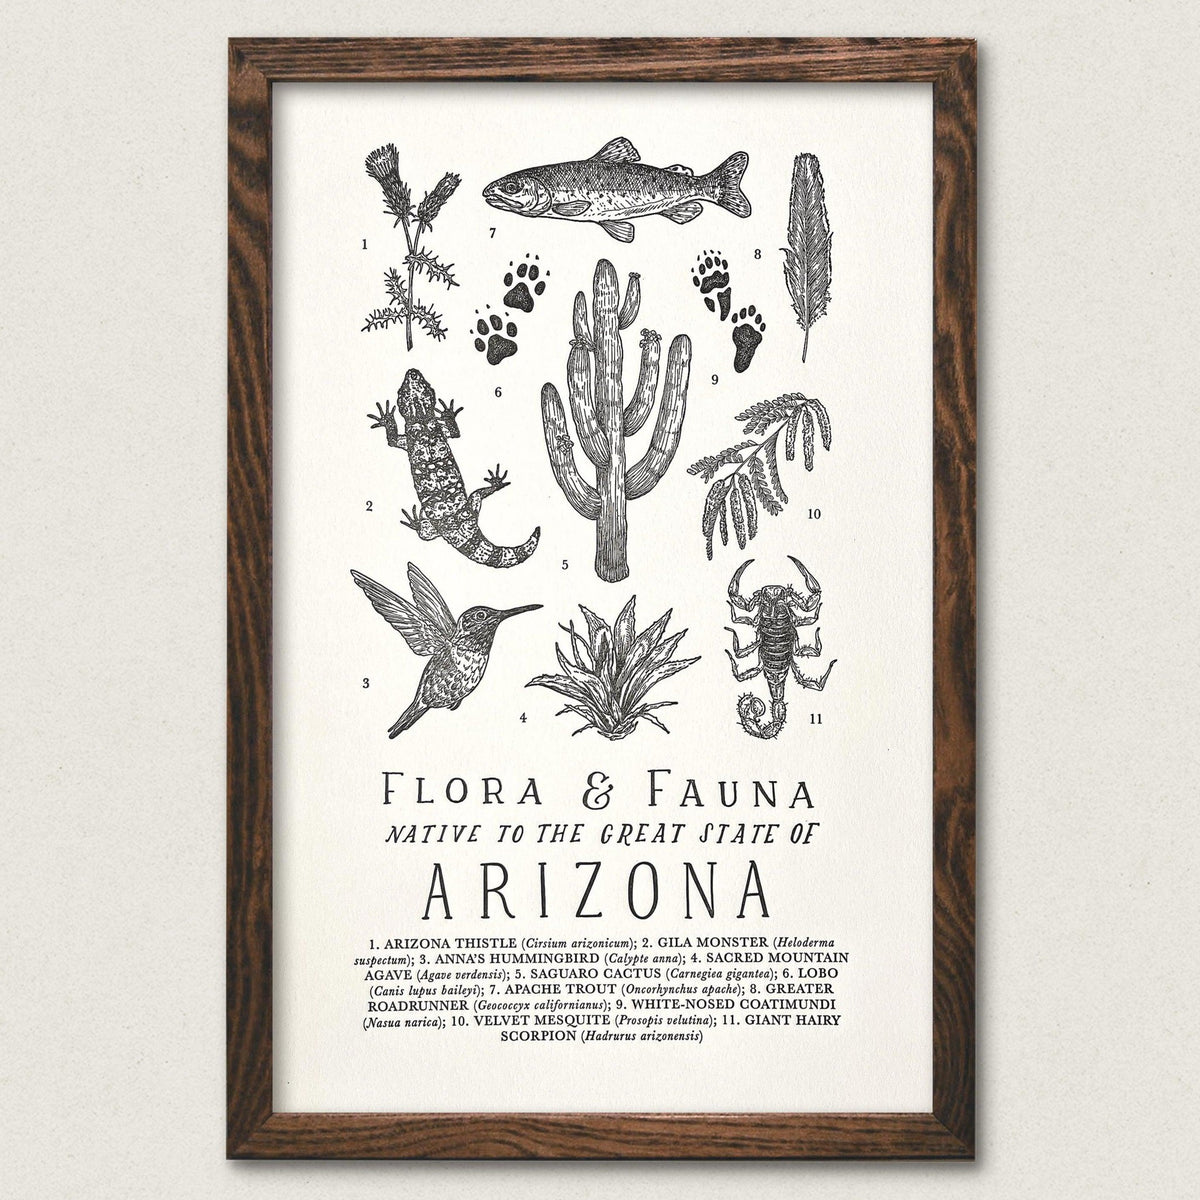 Arizona Field Guide Art Print of arizona plants and animals by The Wild Wander.